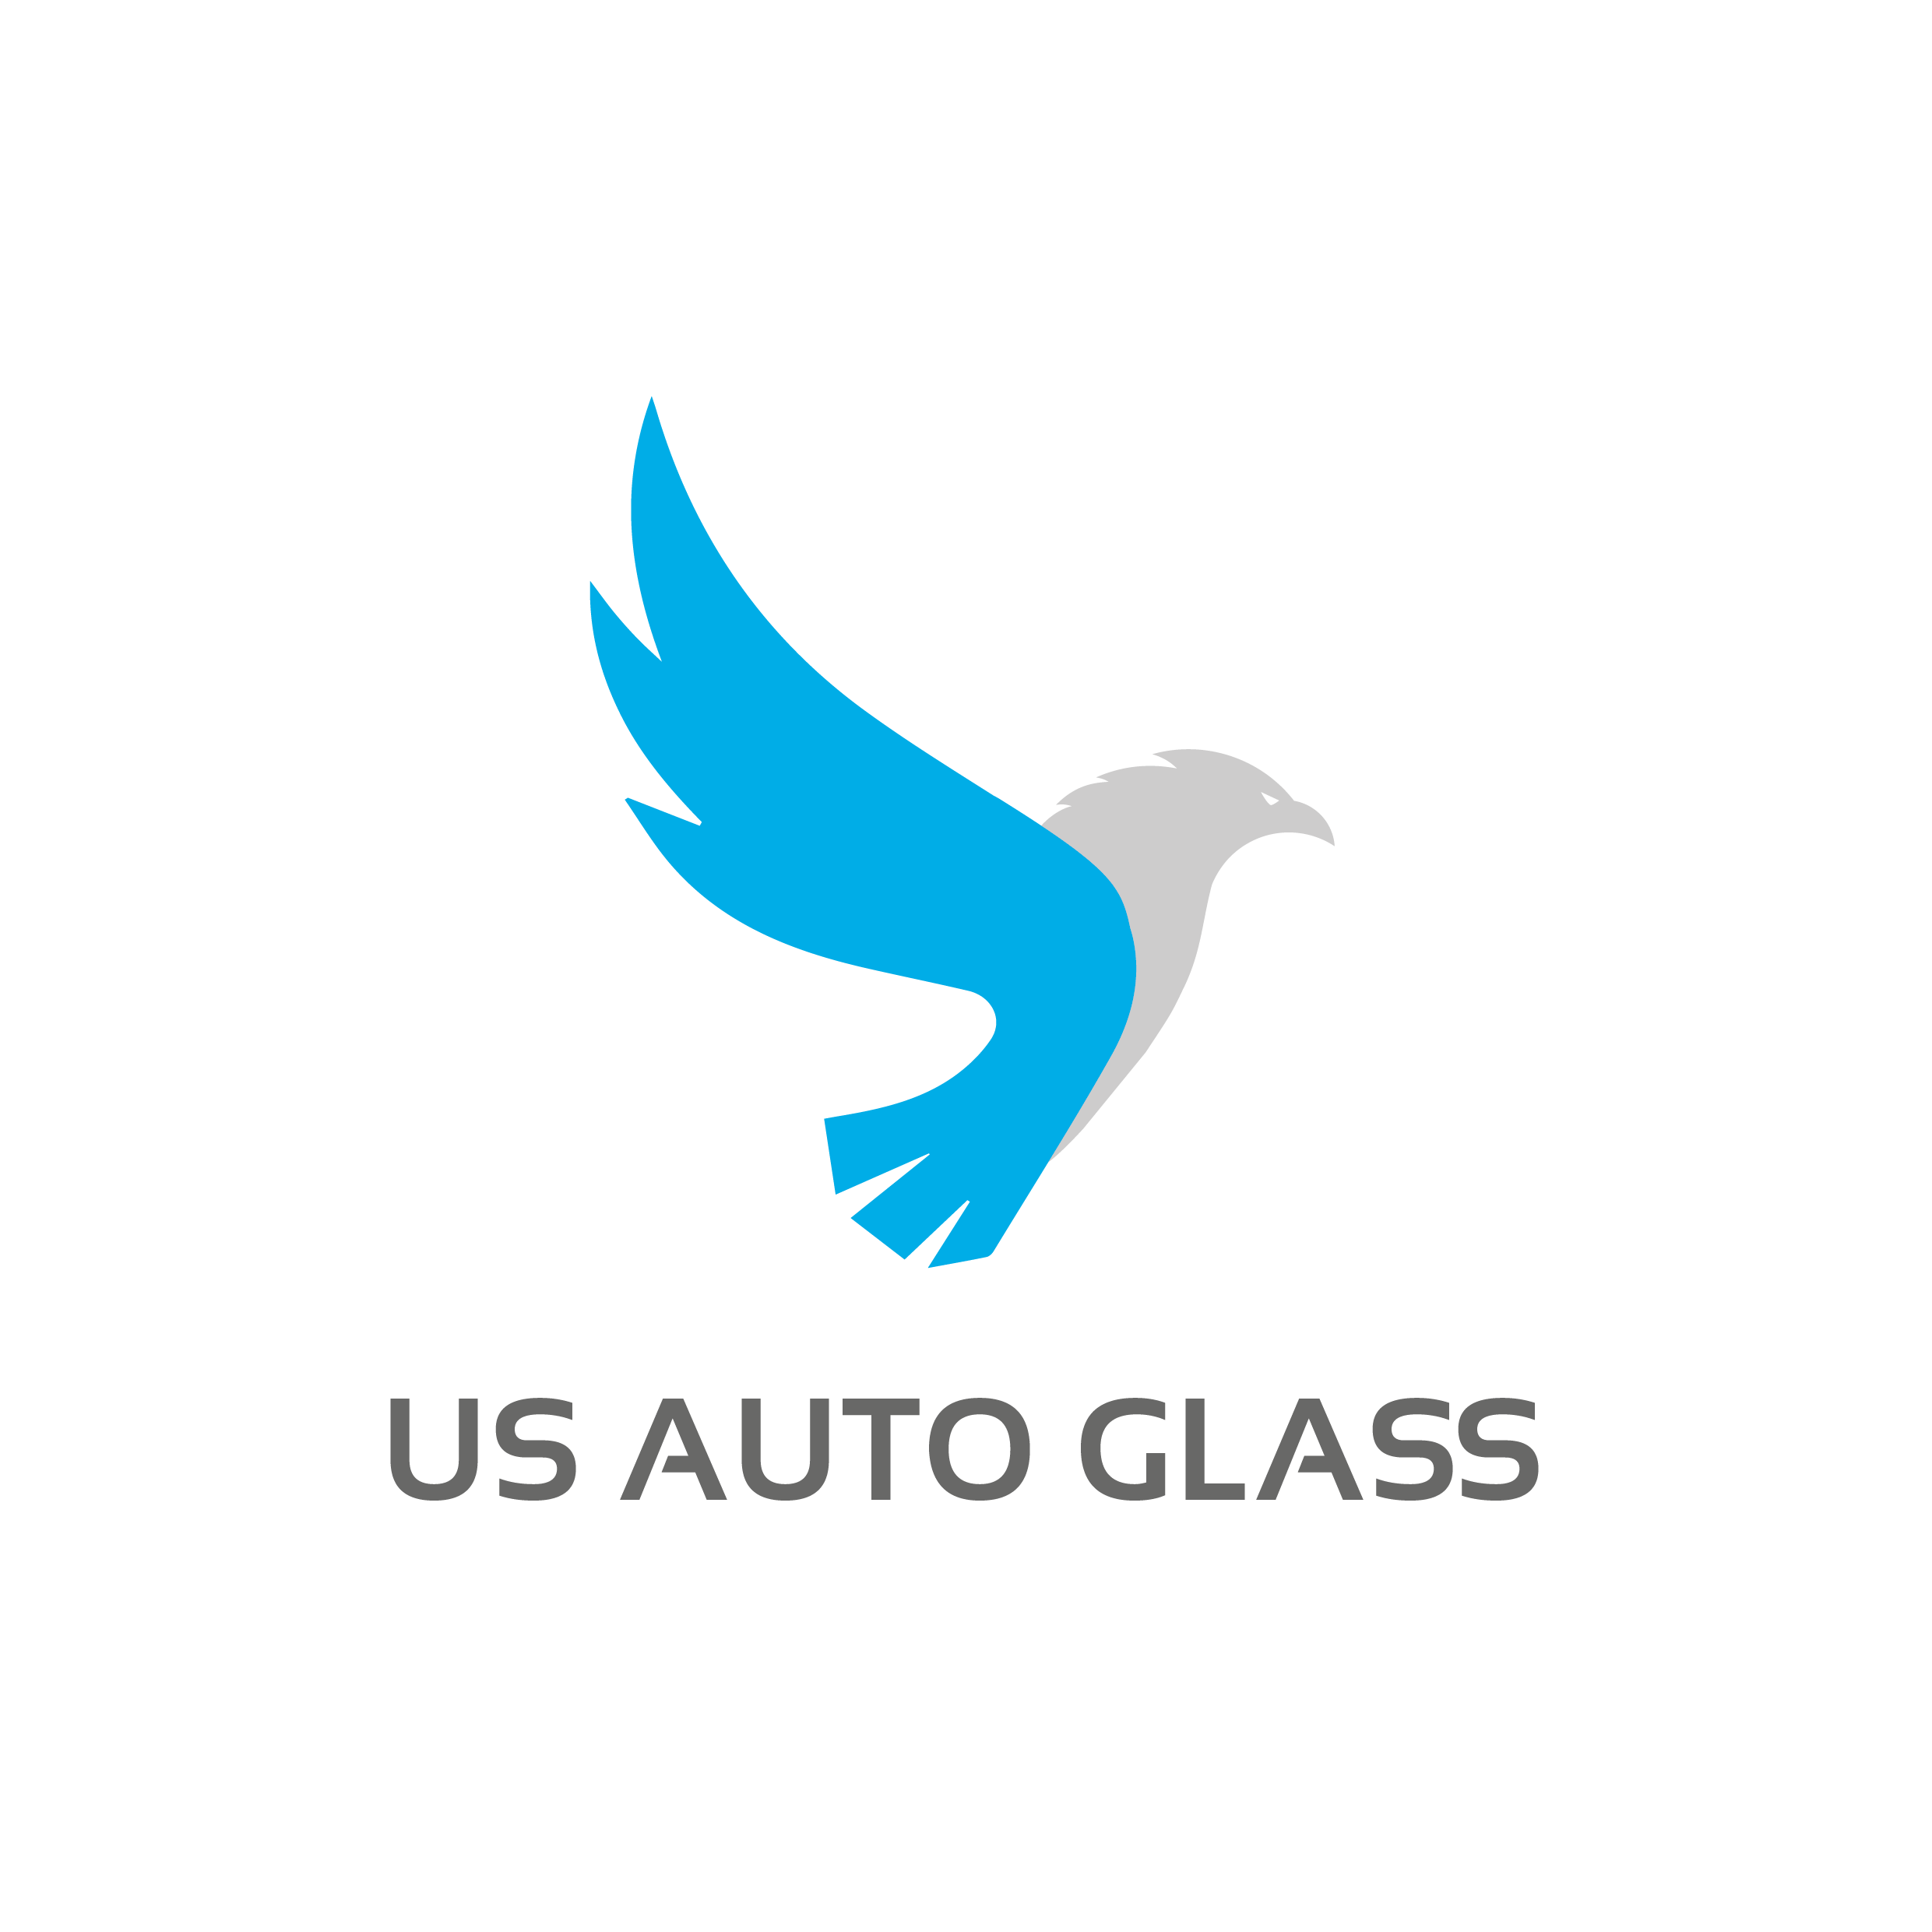 US Auto Glass logo